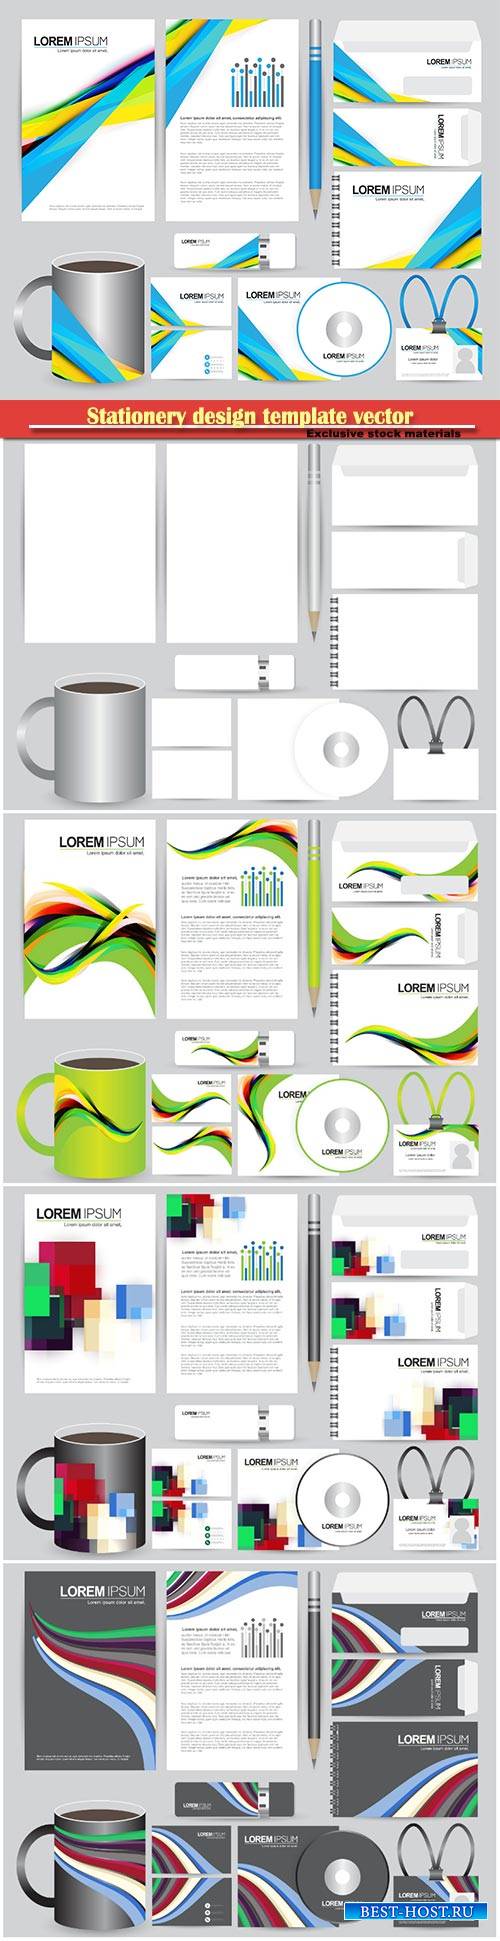 Stationery design template vector illustration